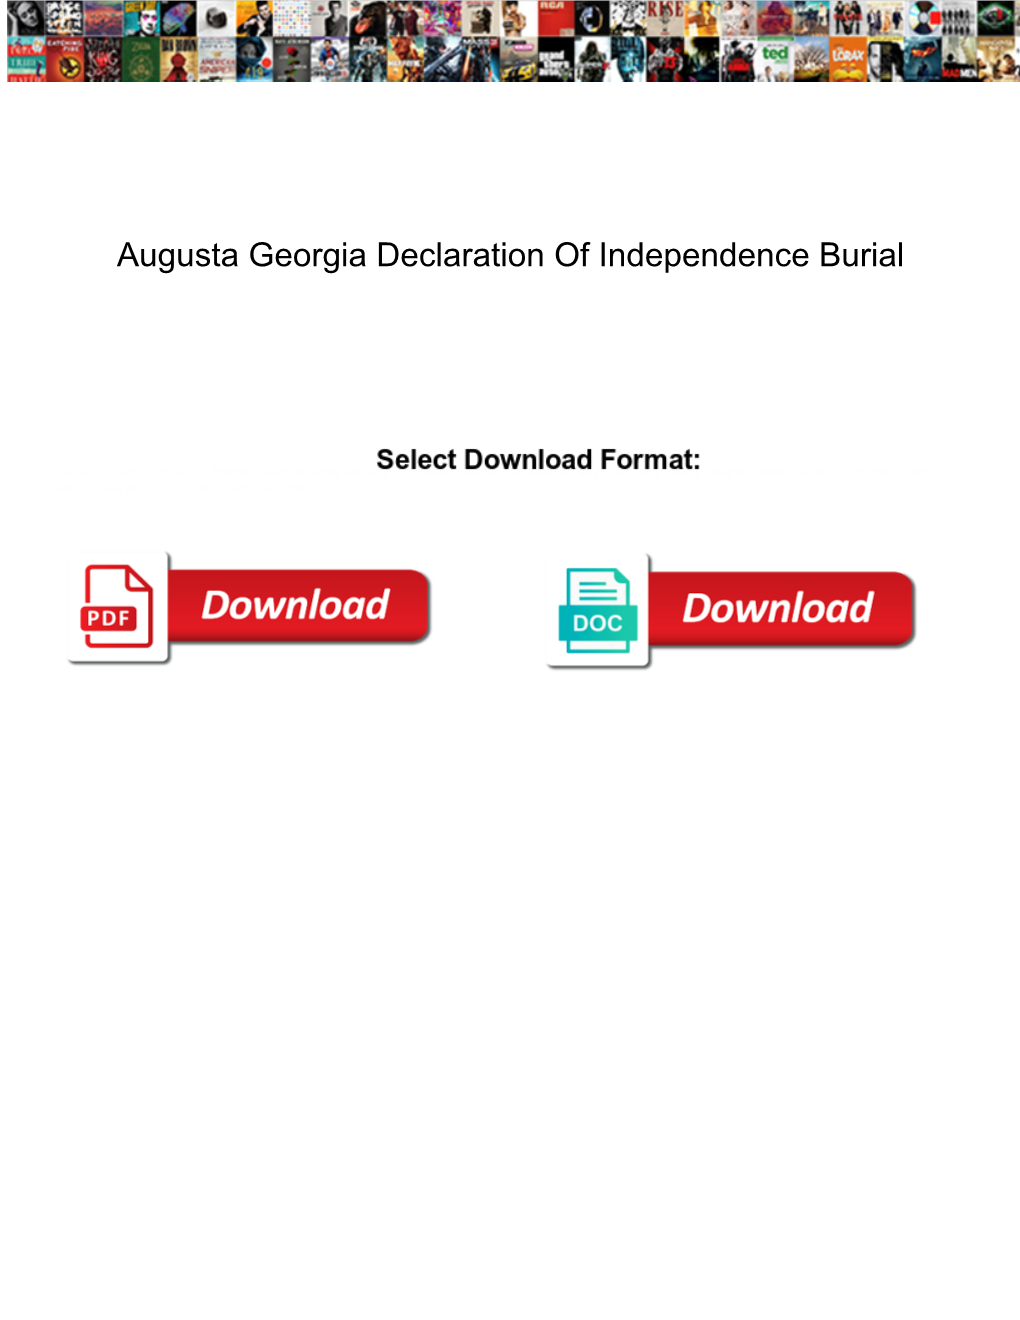 Augusta Georgia Declaration of Independence Burial